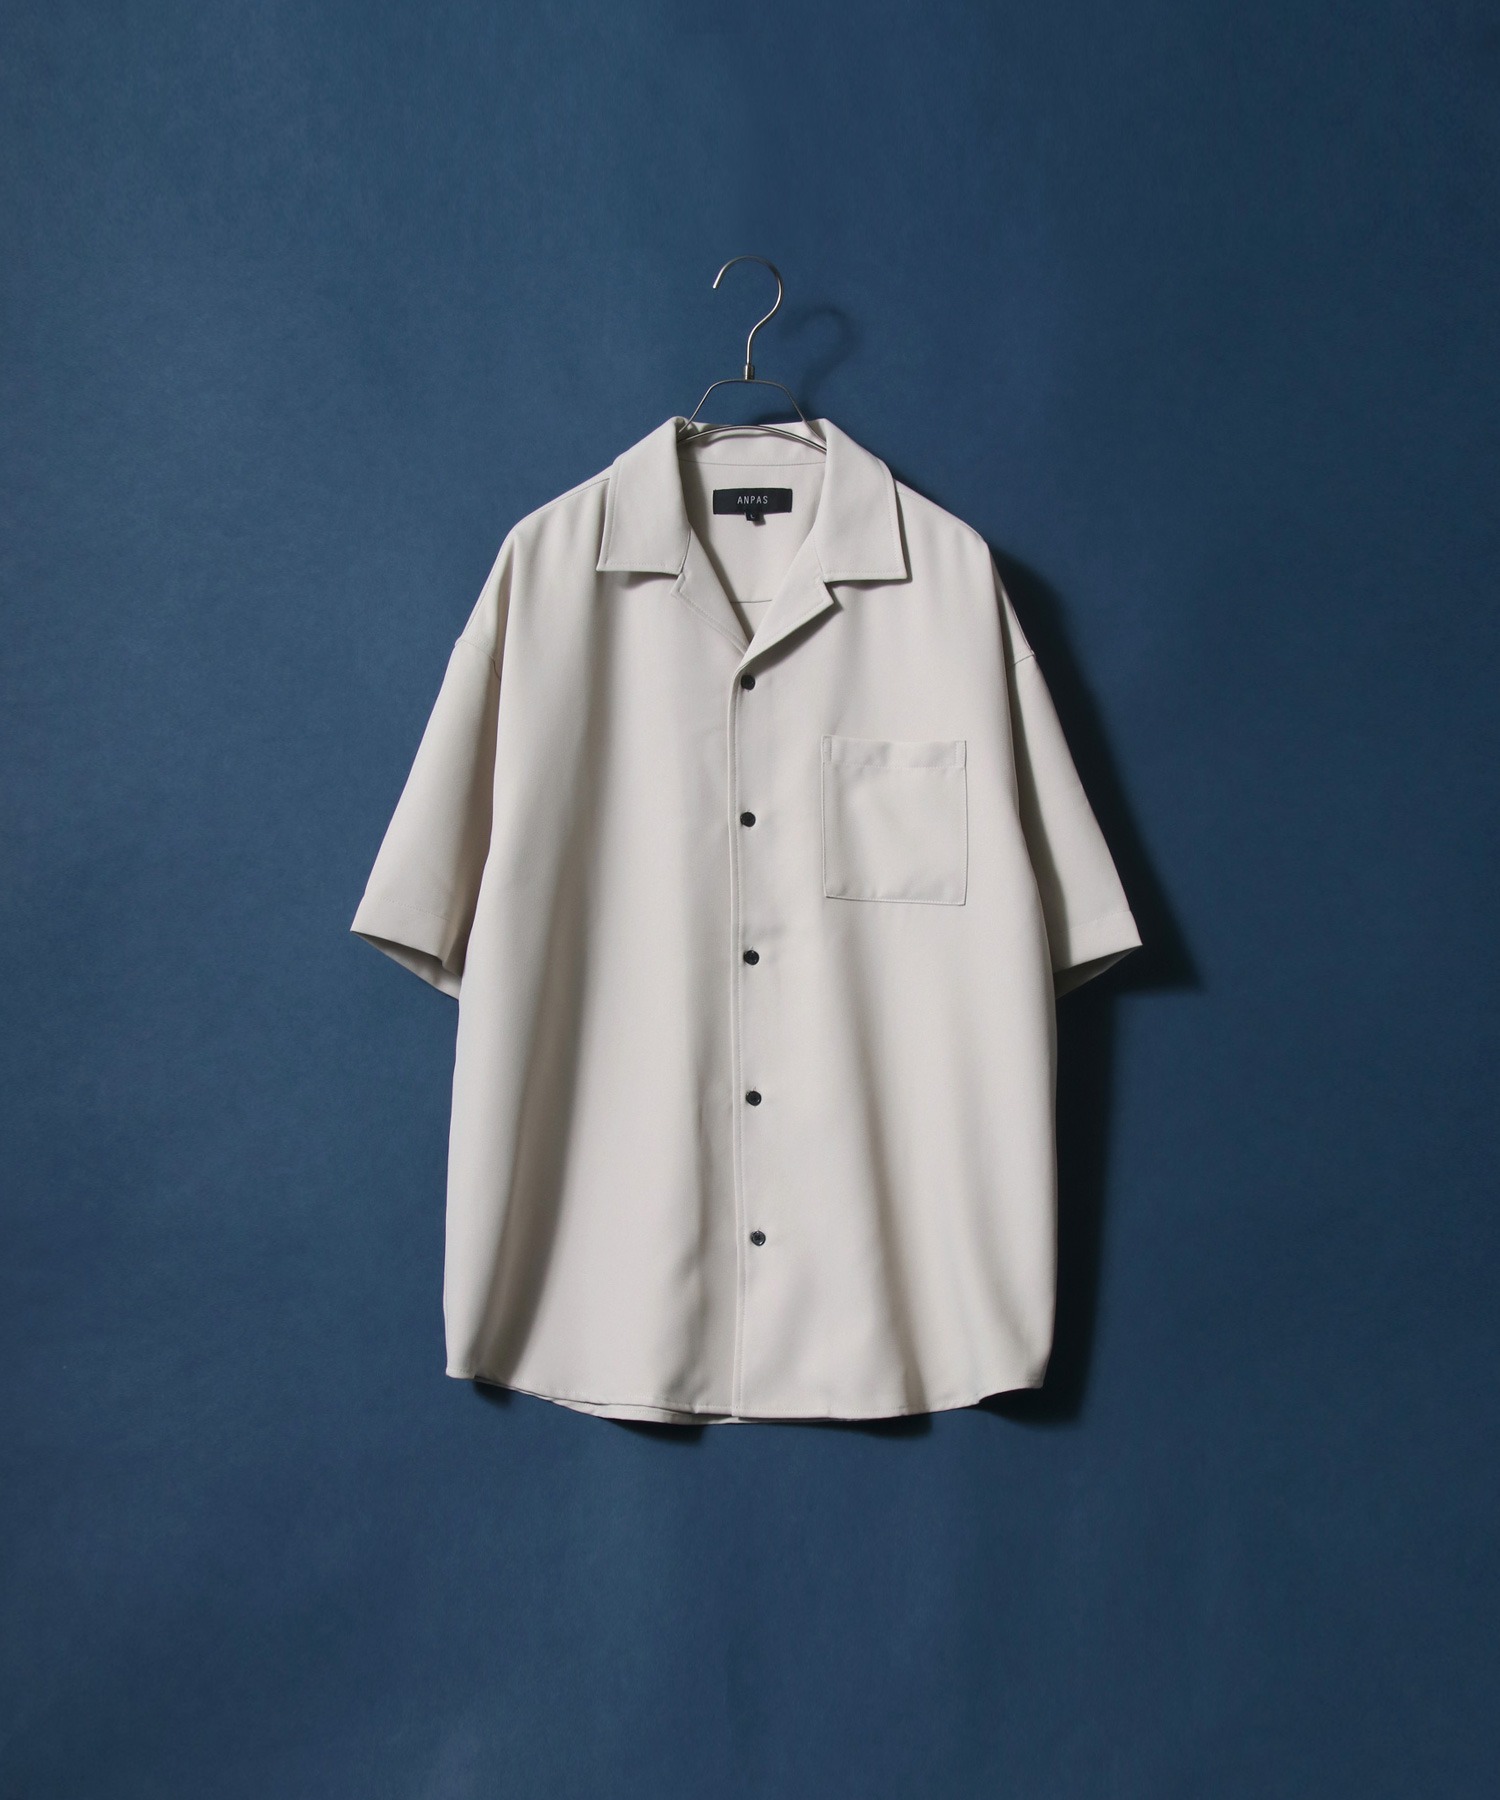 【ANPAS】ツイル オーバーサイズ オープンカラーシャツ/メンズ シャツ 半袖 開襟シャツ 無地